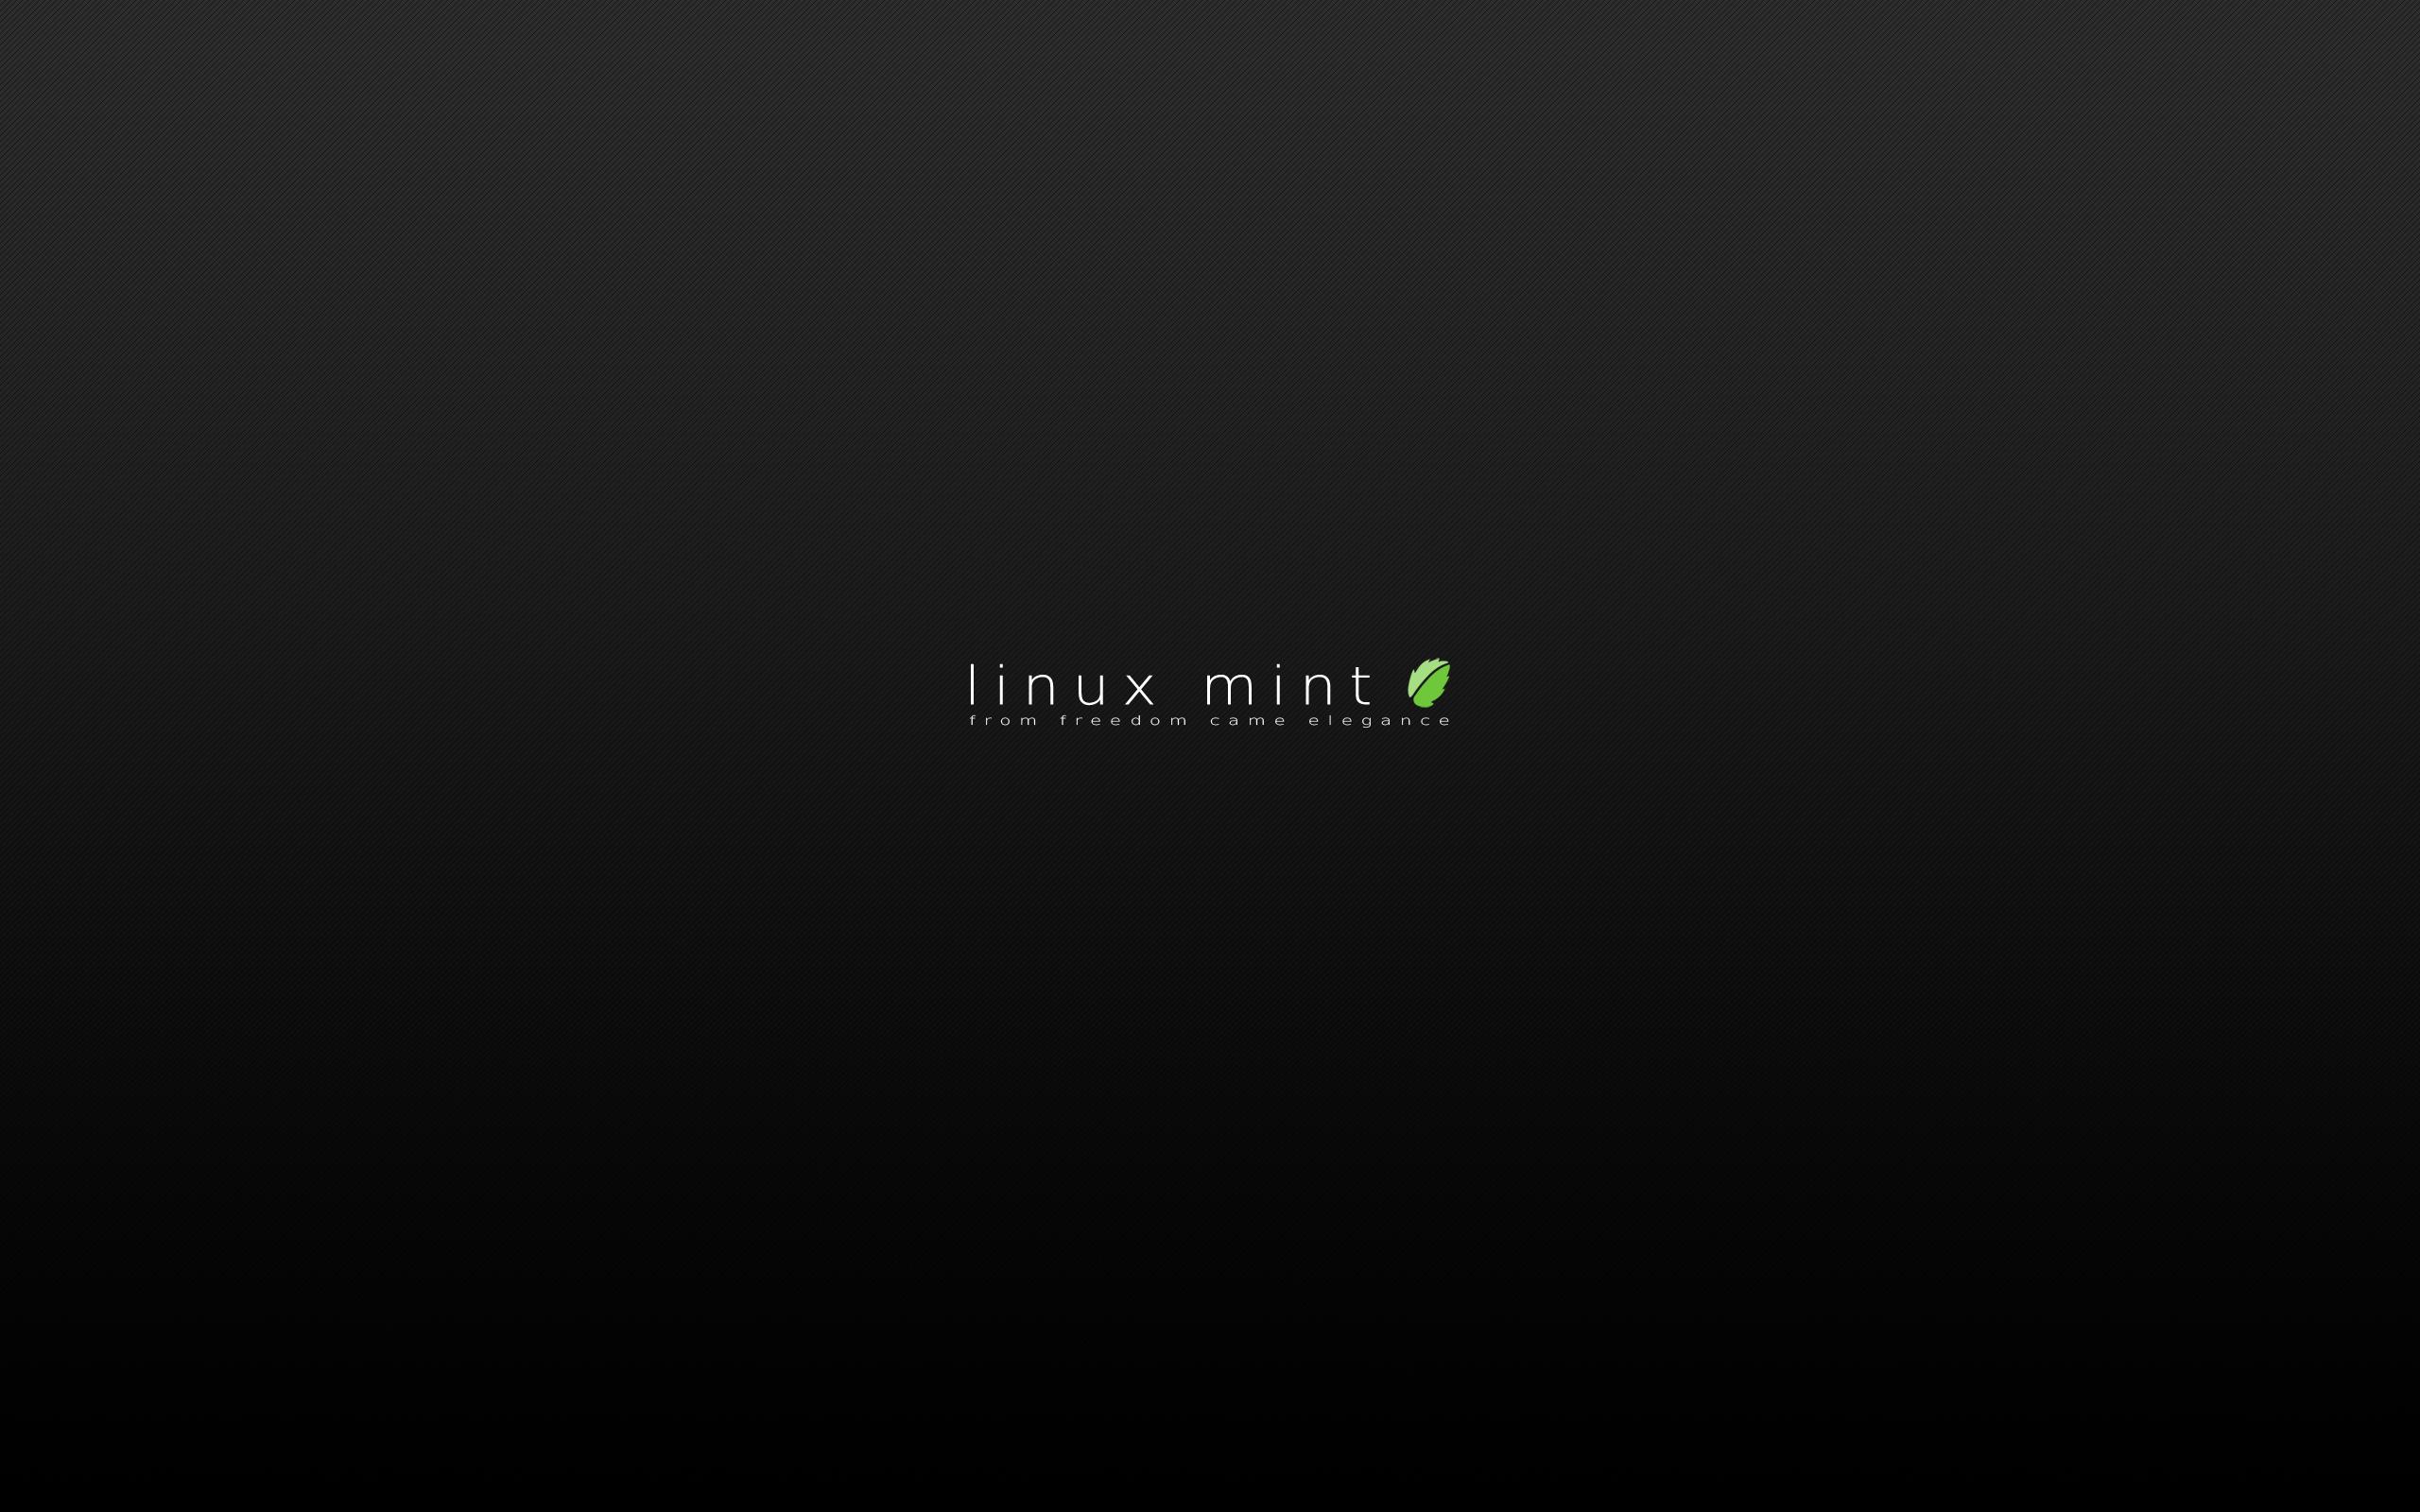 canoscan d646u driver linux mint